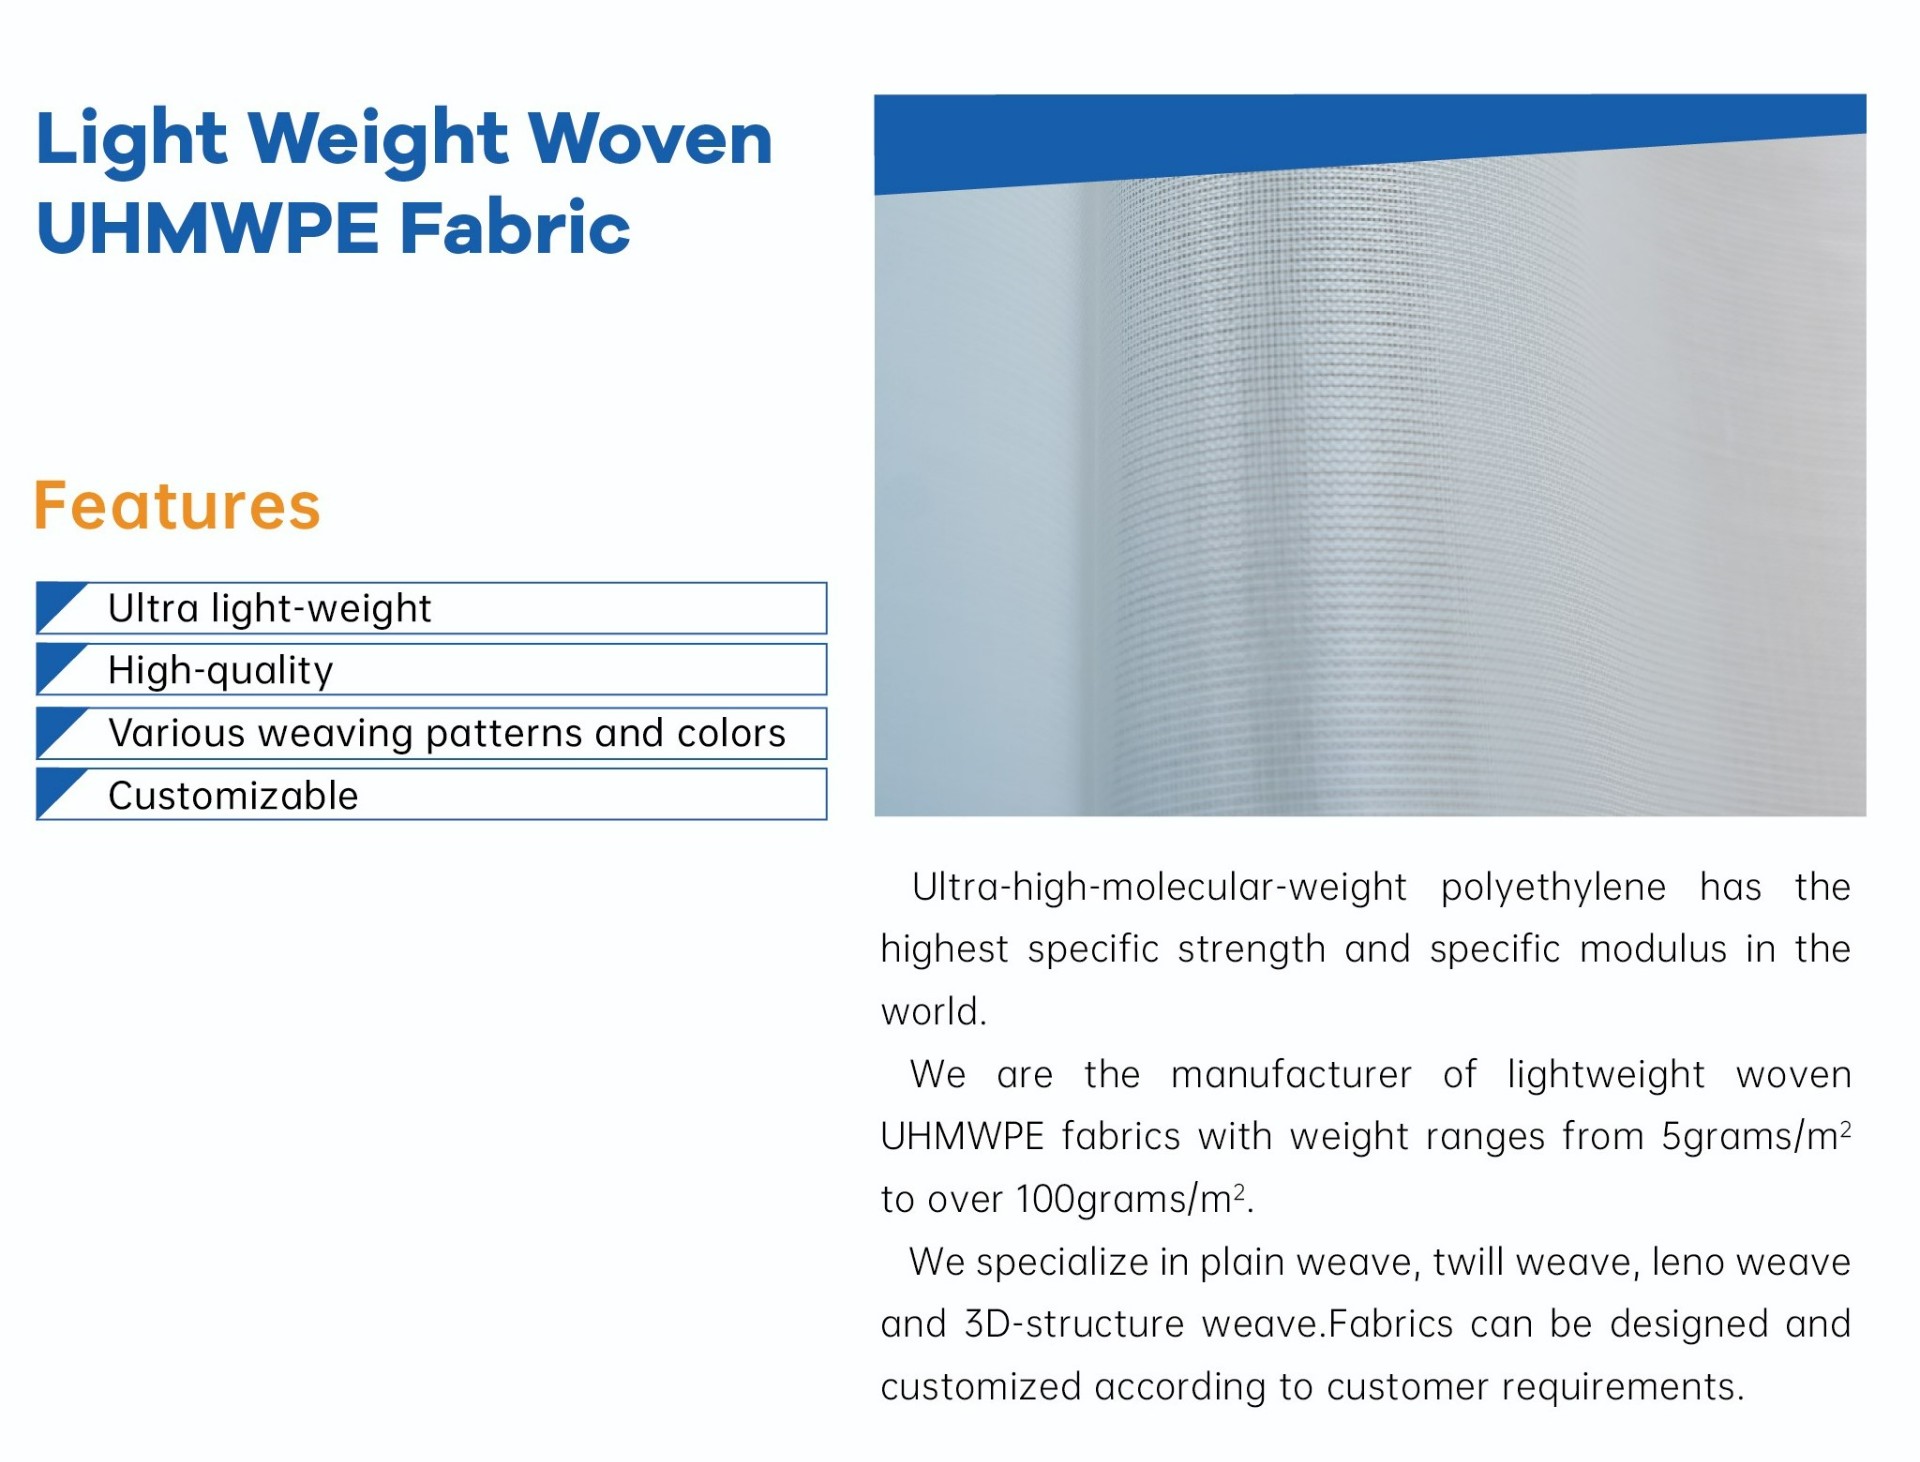 Light weight UHMWPE fabric